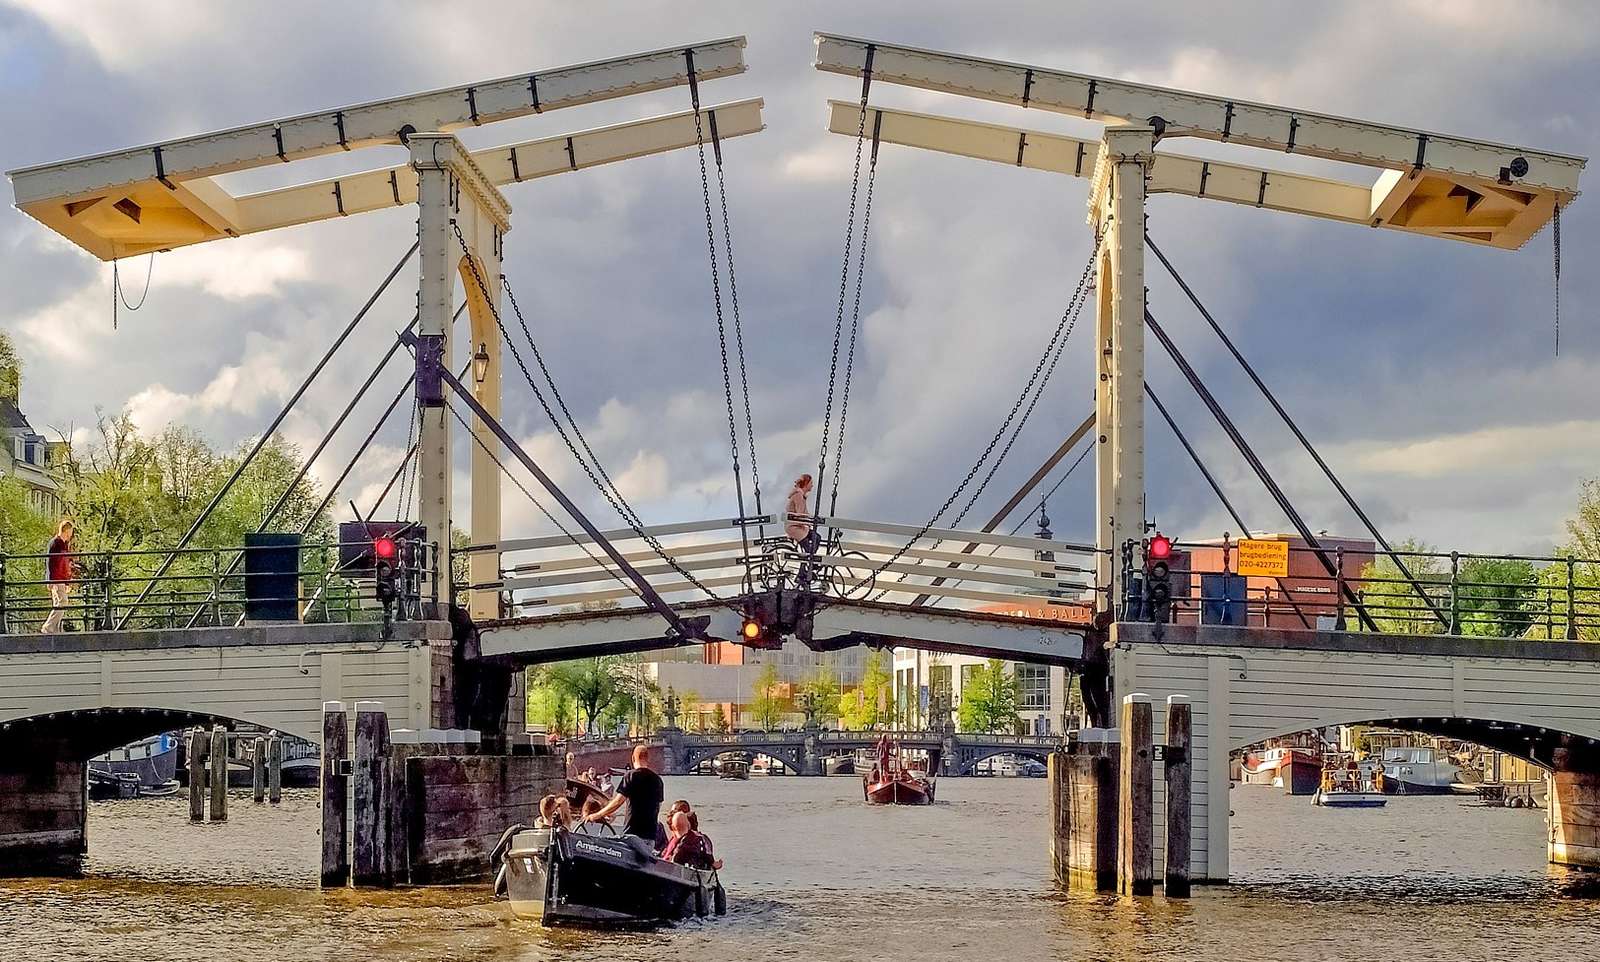 Magere Brug (Skinny Bridge) στο Άμστερνταμ online παζλ